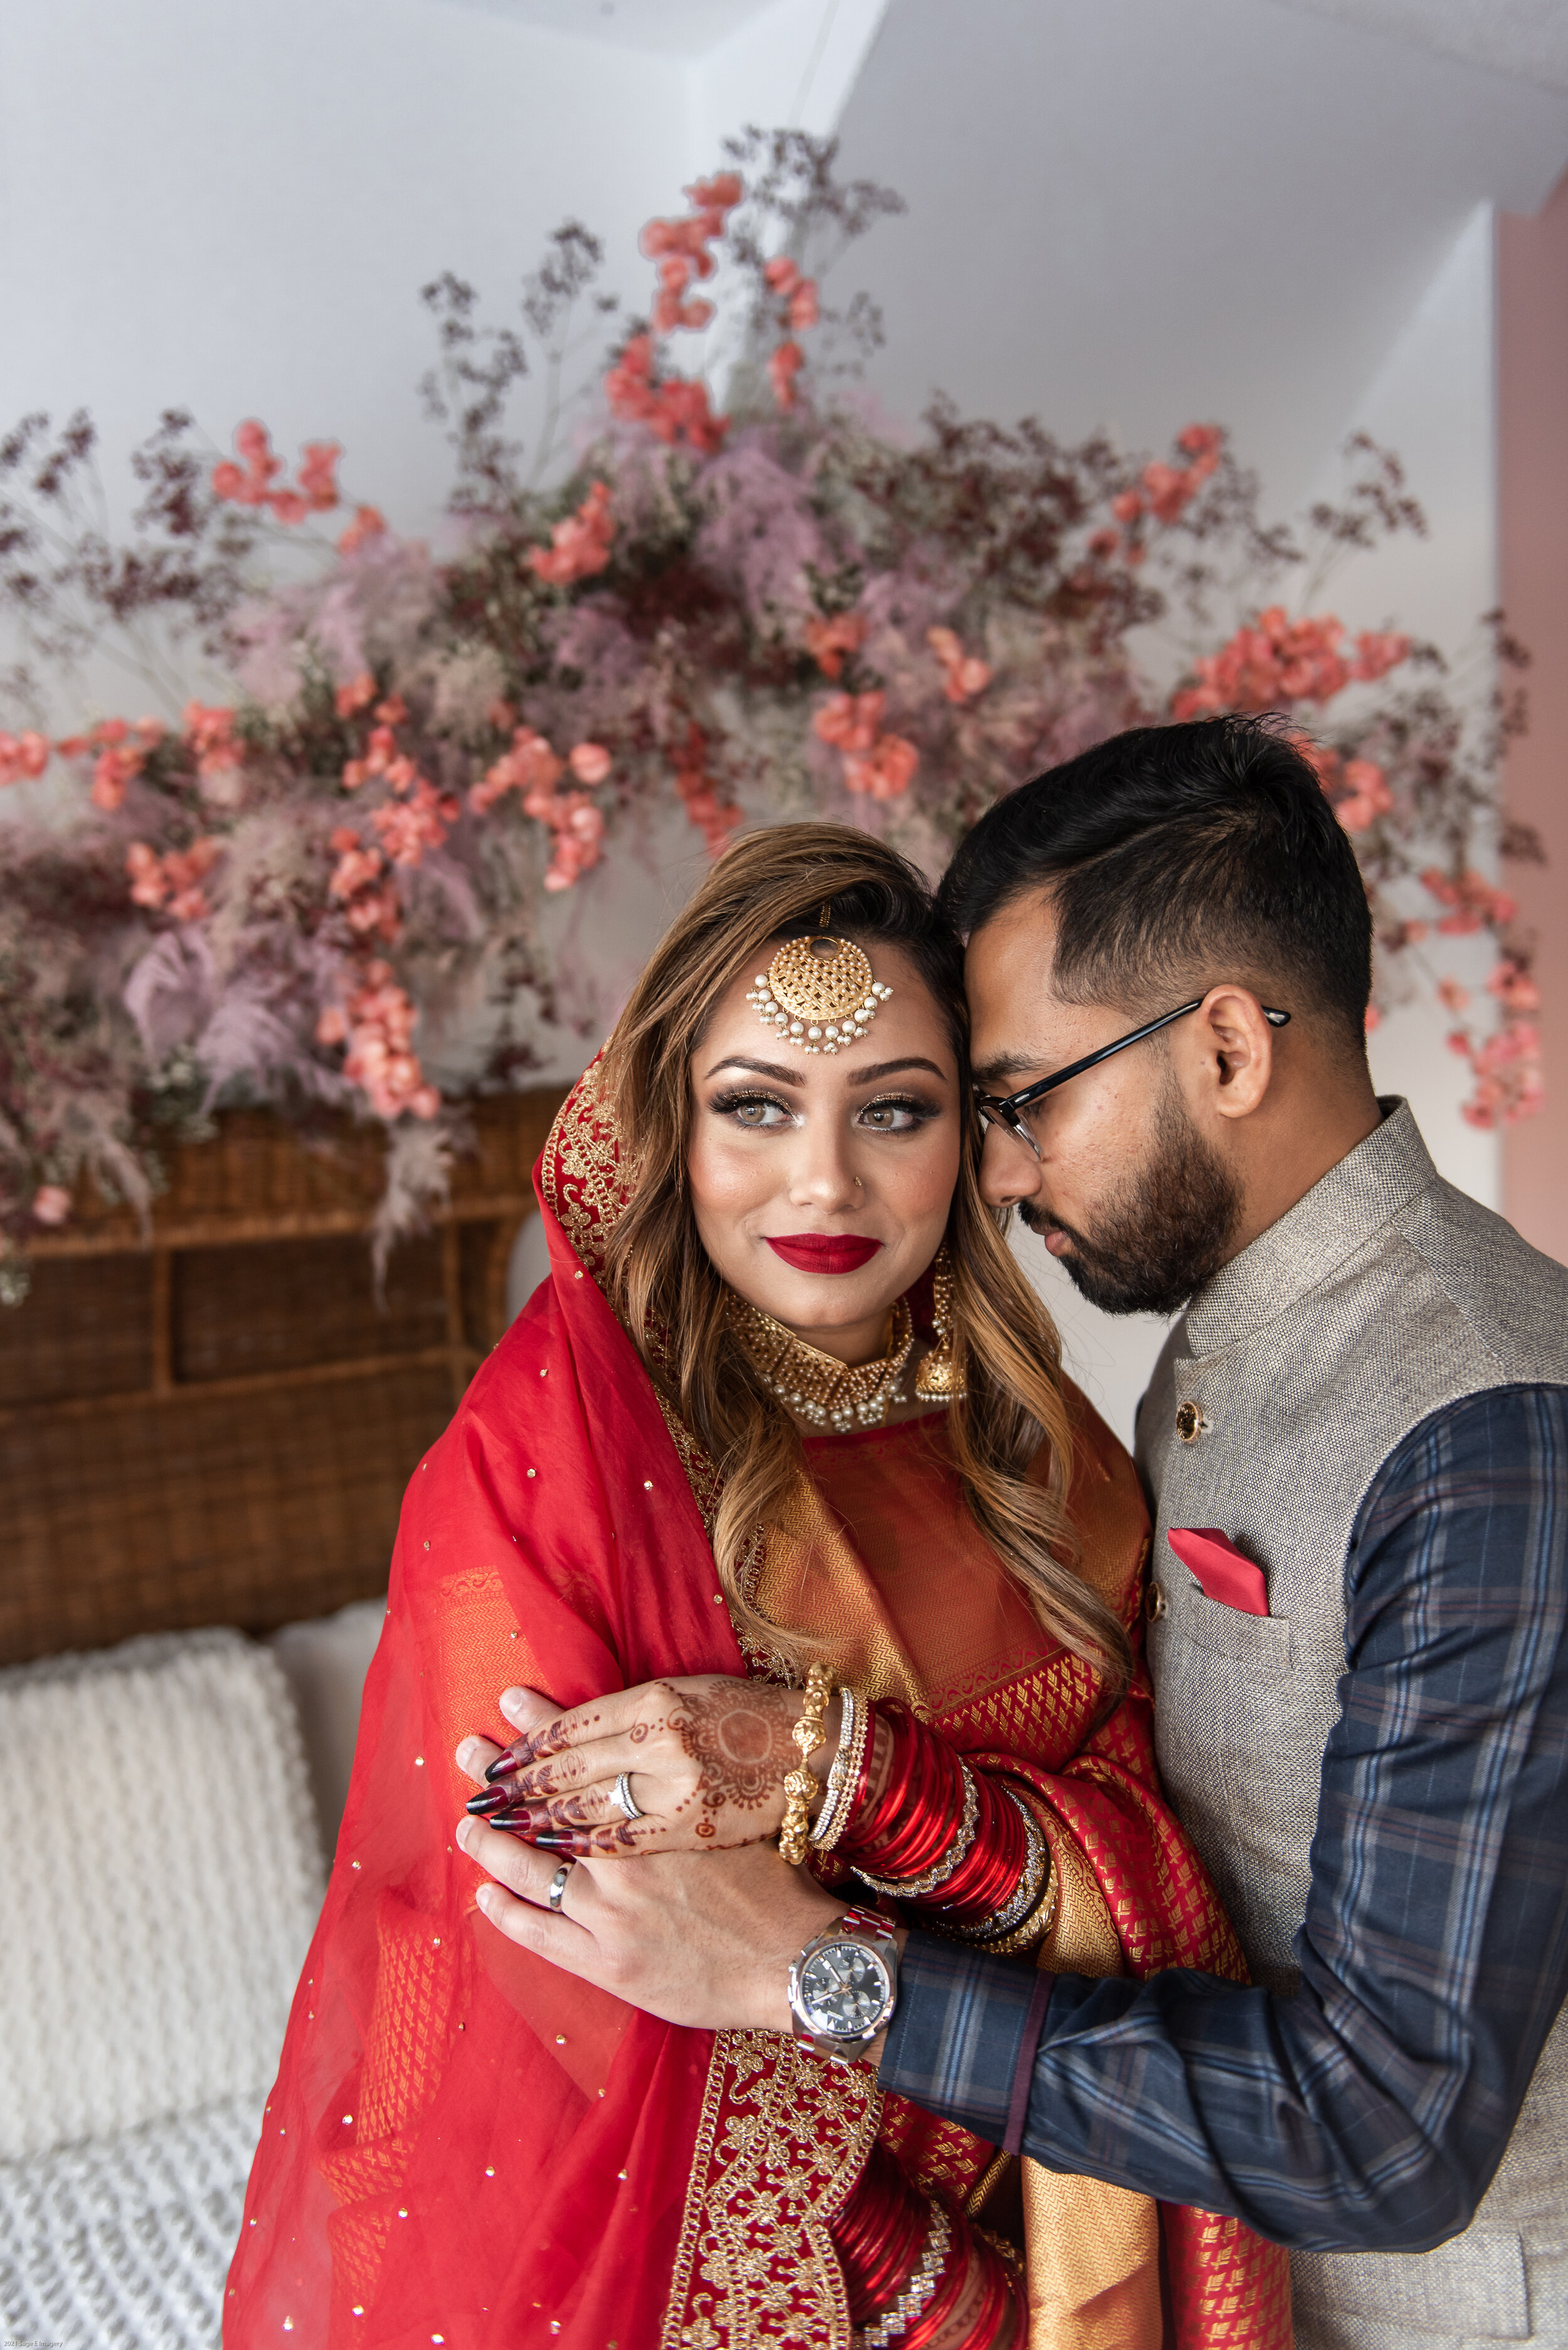 Nibrasul&Yashna LV Studios Apricot Floral Indian Wedding-25.jpg